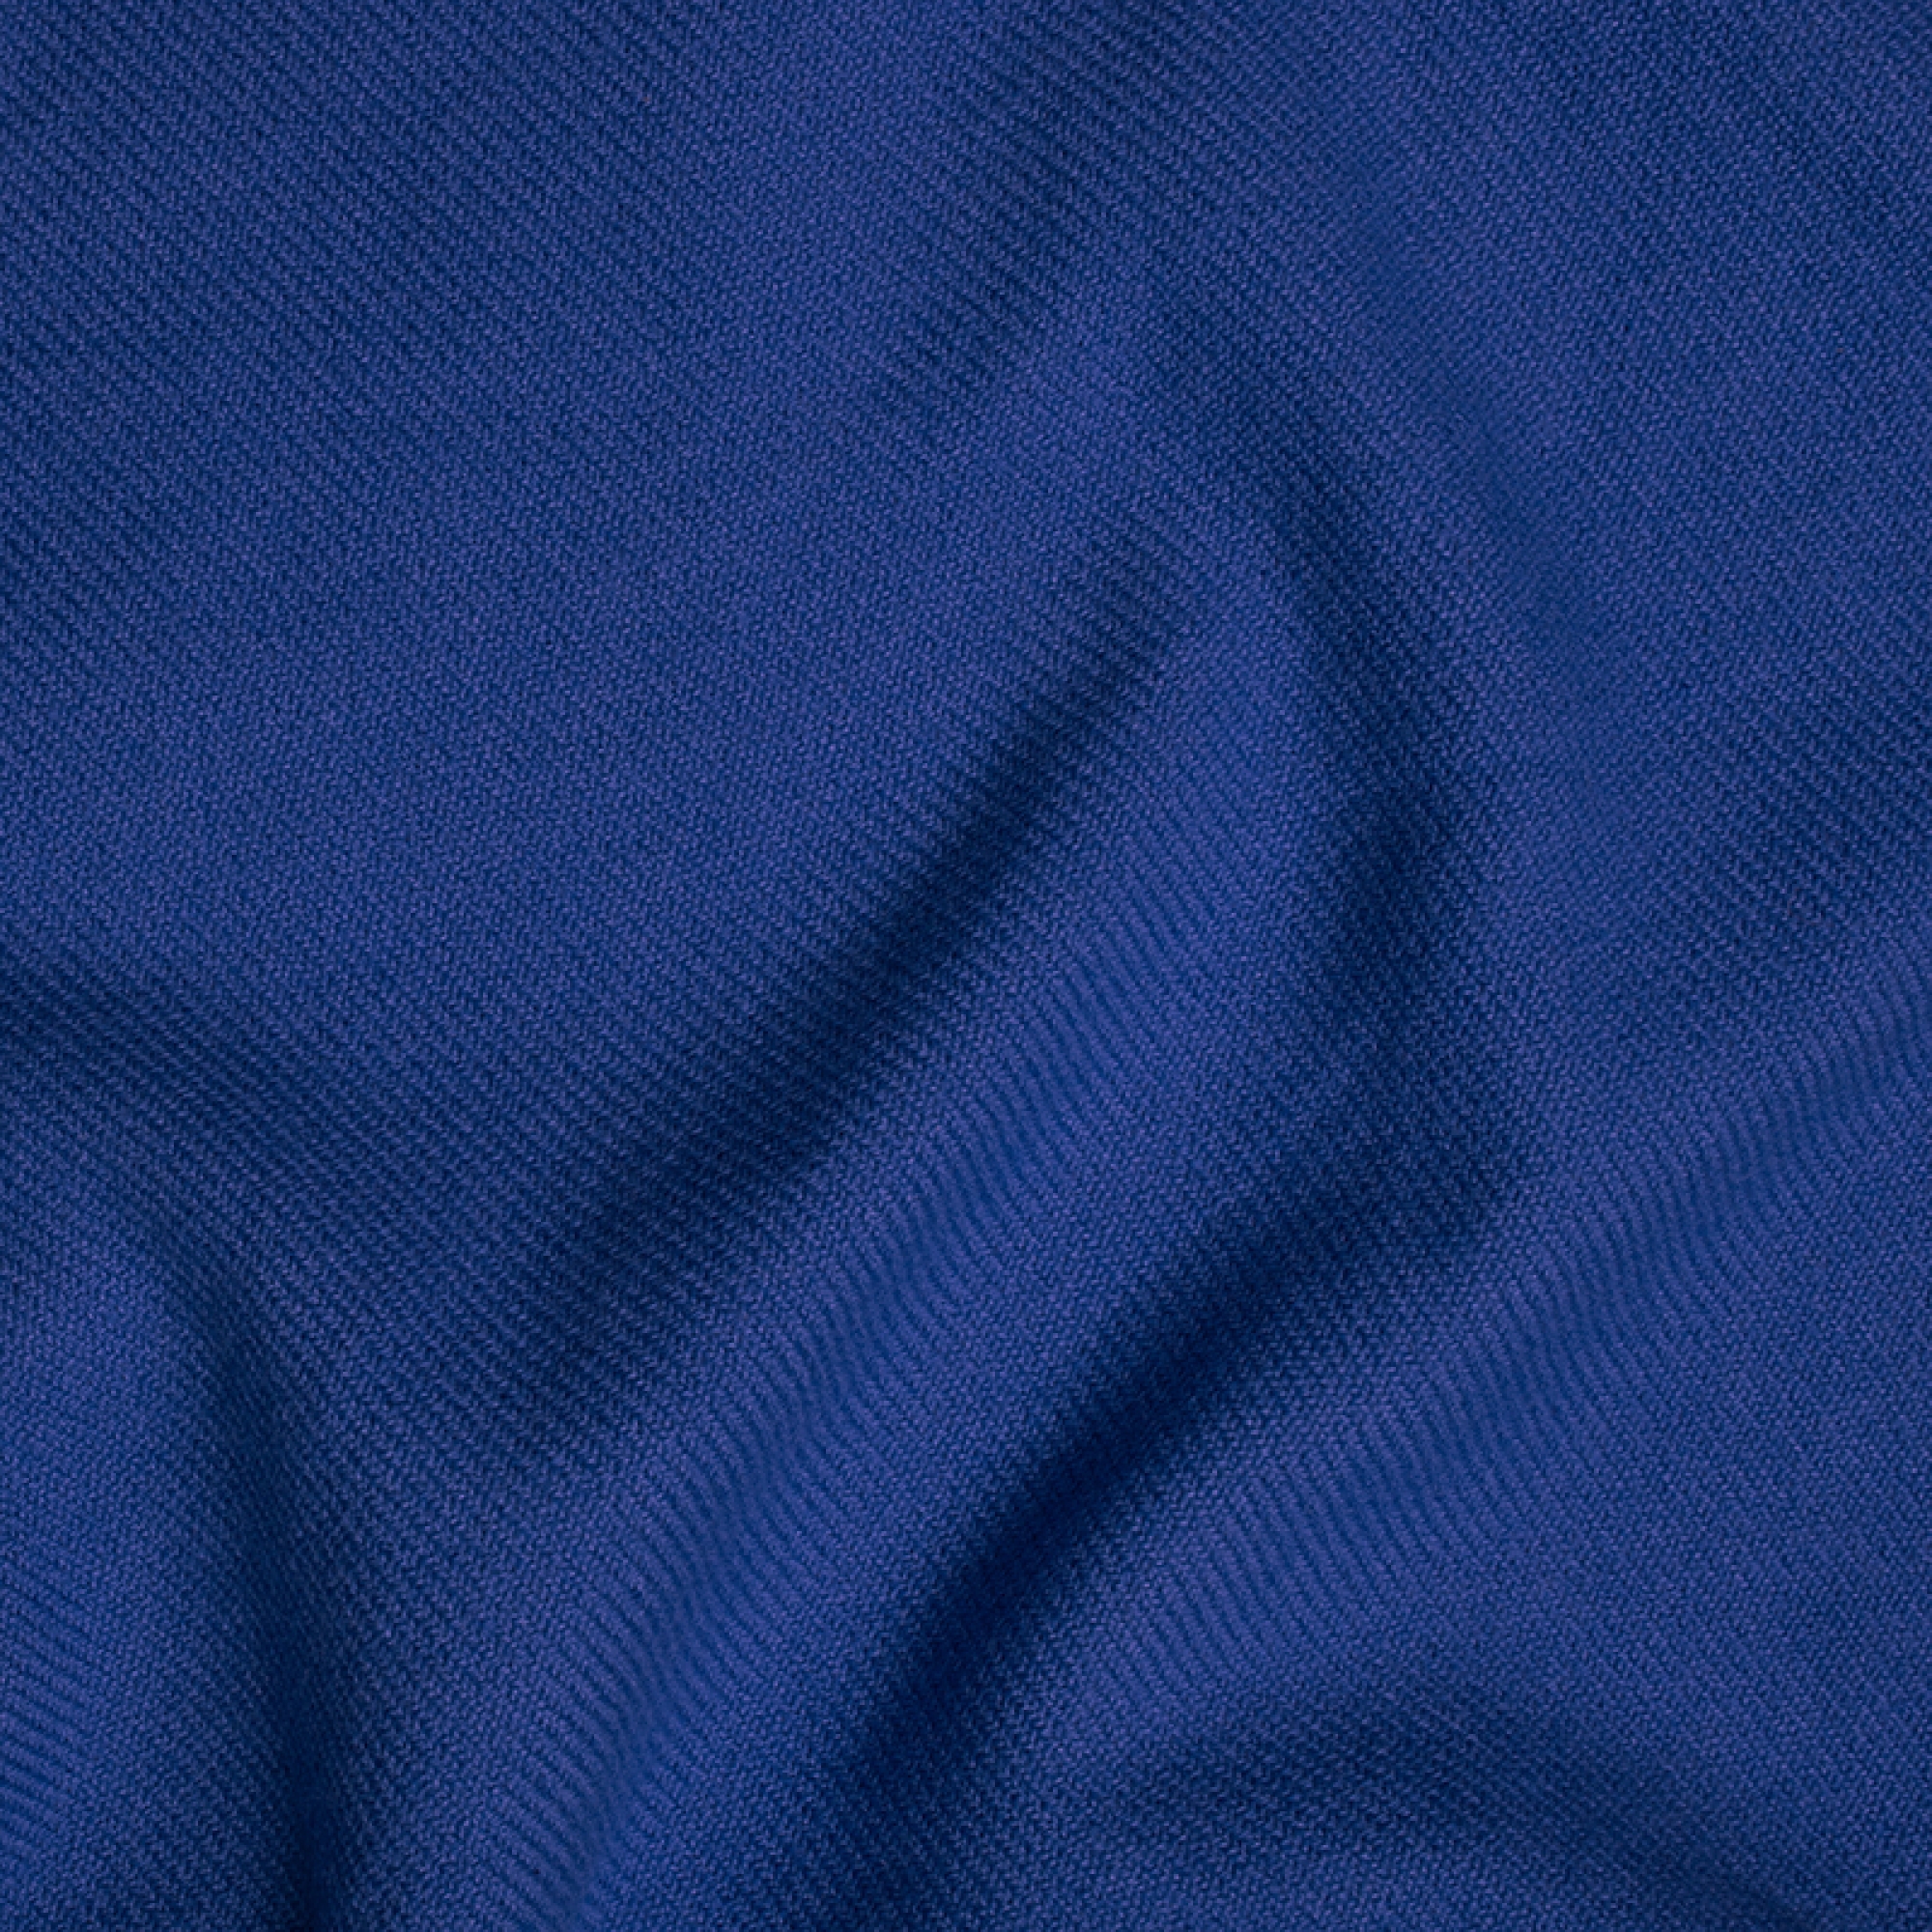 Cashmere accessories blanket toodoo plain m 180 x 220 light cobalt blue 180 x 220 cm